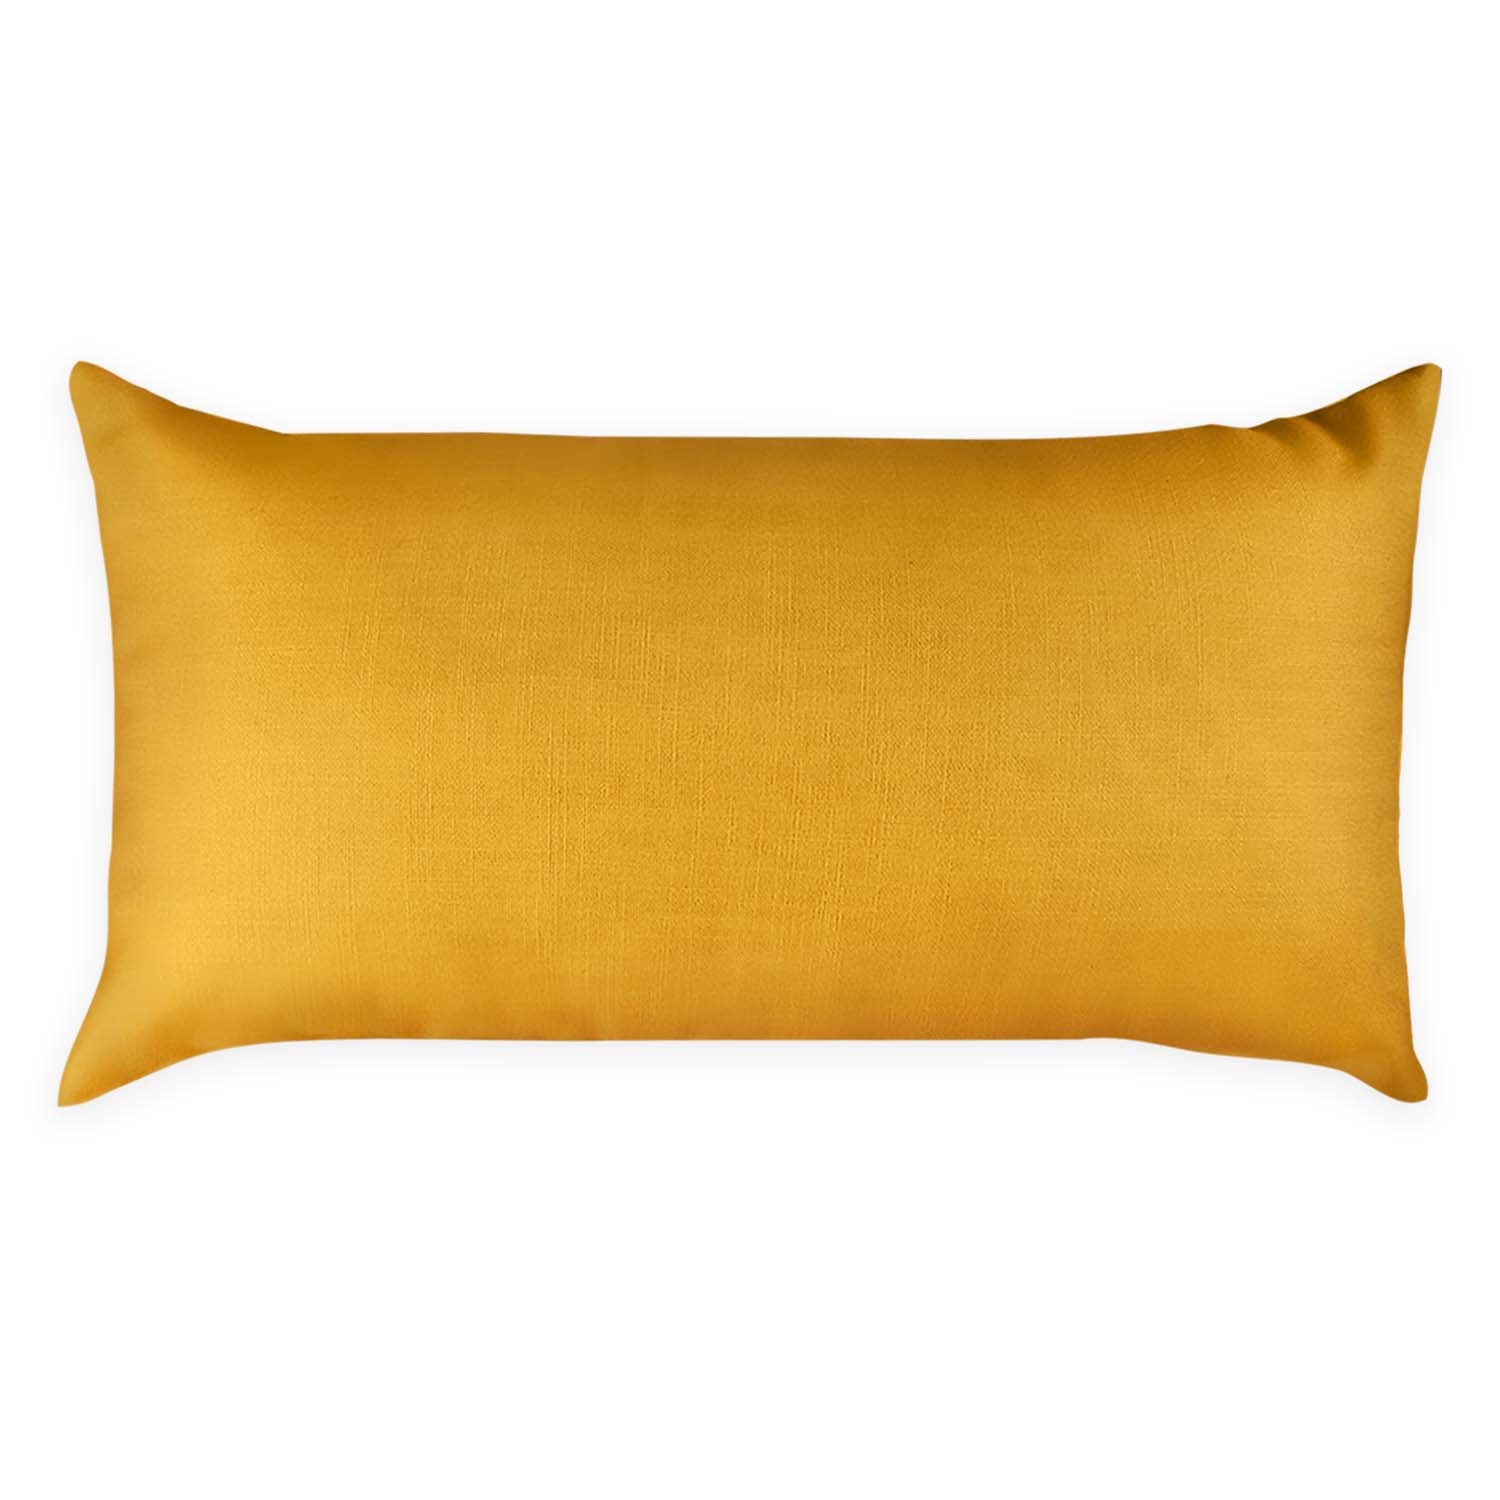 Chihuahua Lumbar Pillow -  -  - Knotty Tie Co.